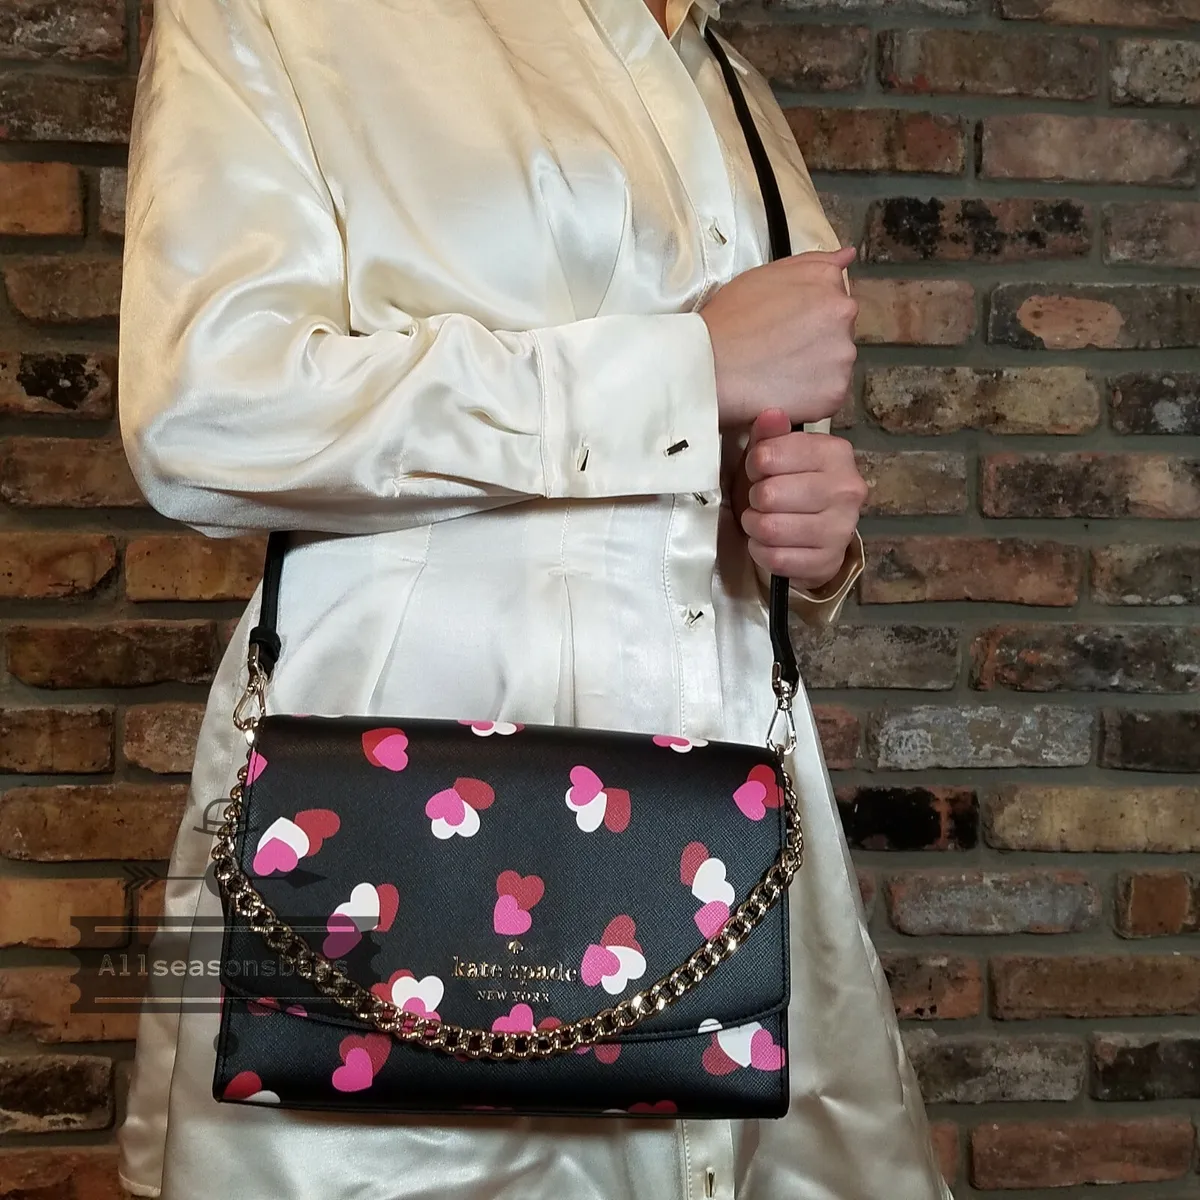 Kate Spade Bags | Kate Spade - Carson Convertible Crossbody | Color: Pink | Size: Os | Katiehkong's Closet